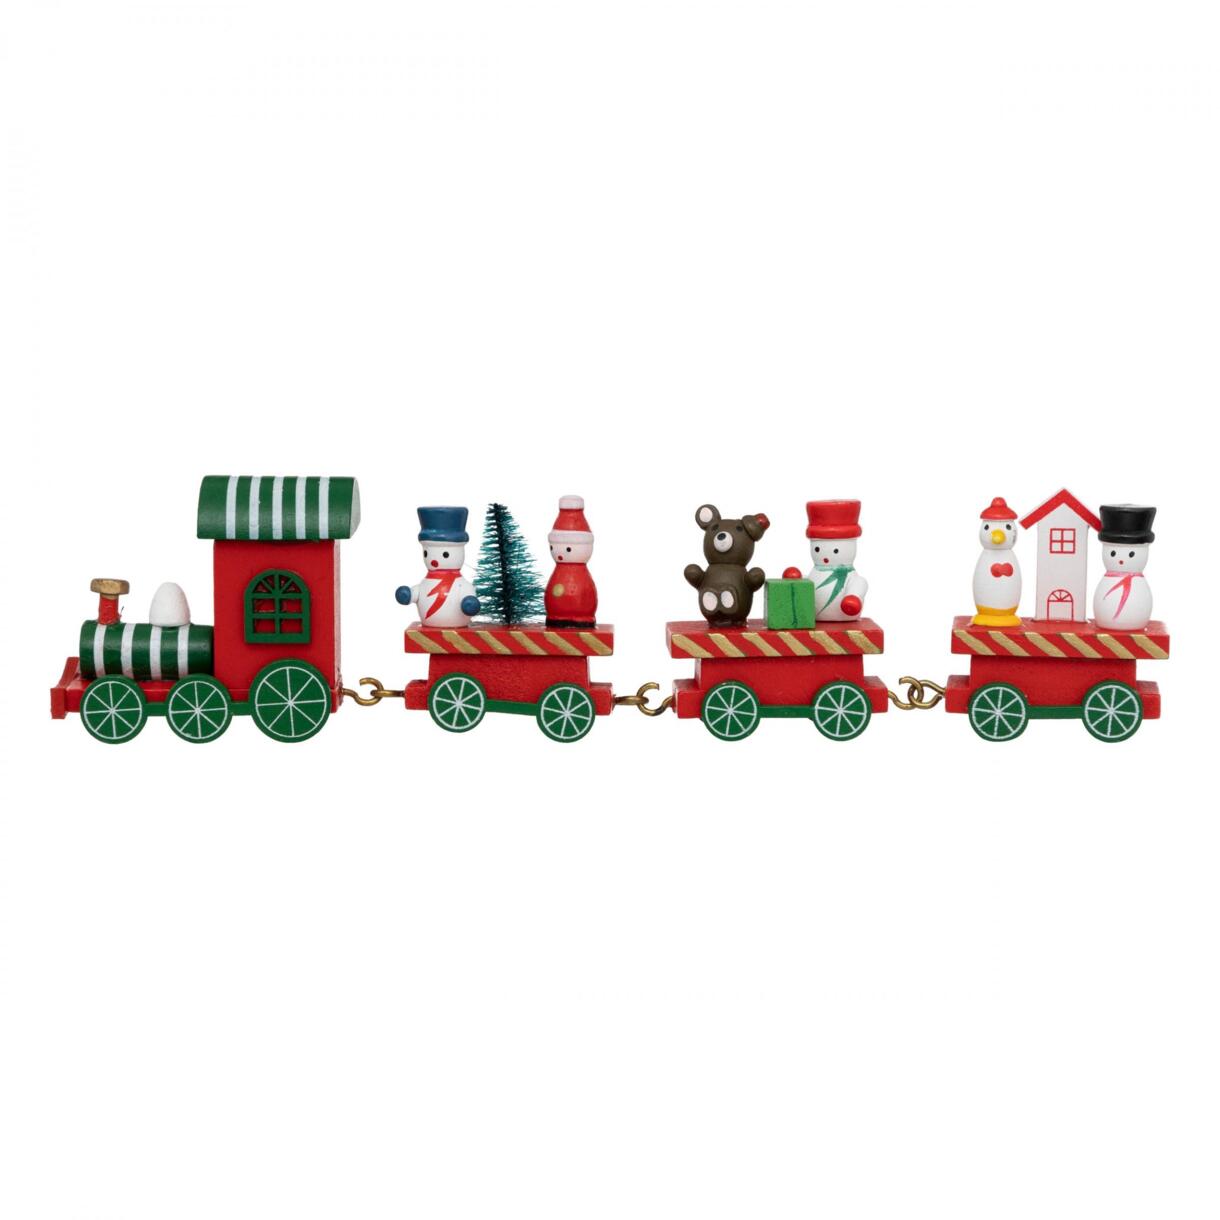 Tren decorativo  Farandola de Navidad 1